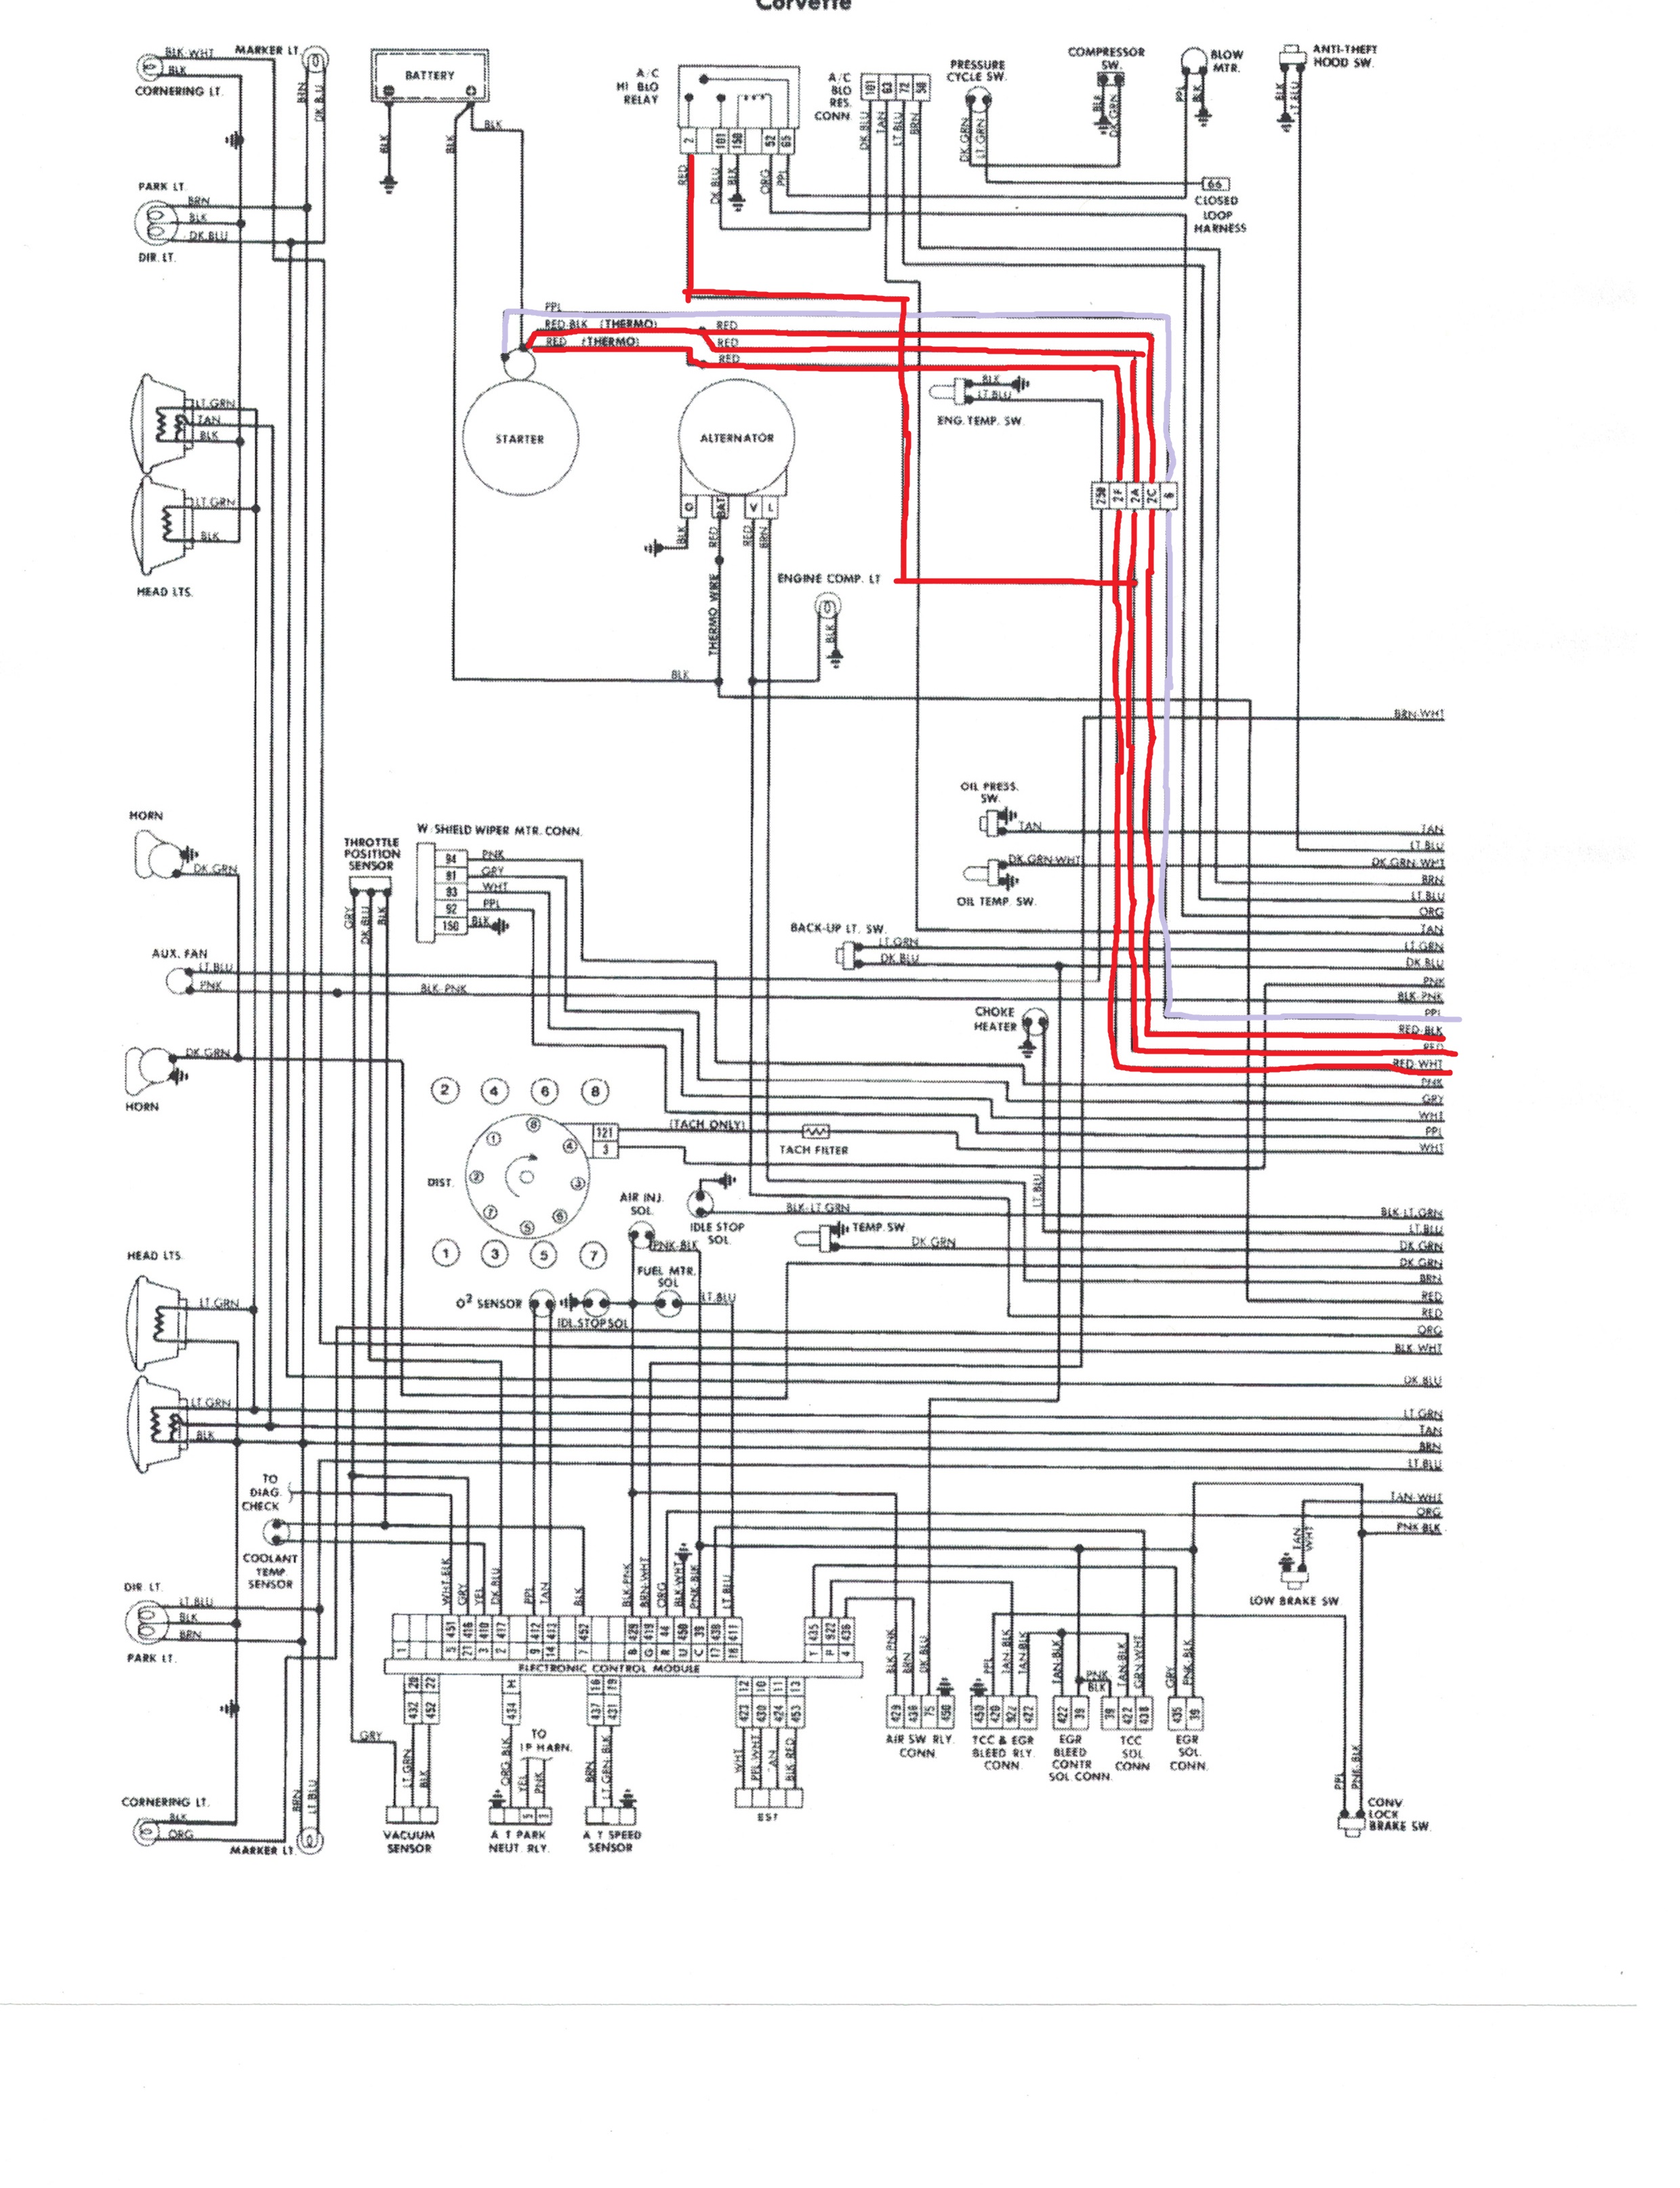 [DIAGRAM] 1963 Corvette Wiring Diagram FULL Version HD Quality Wiring